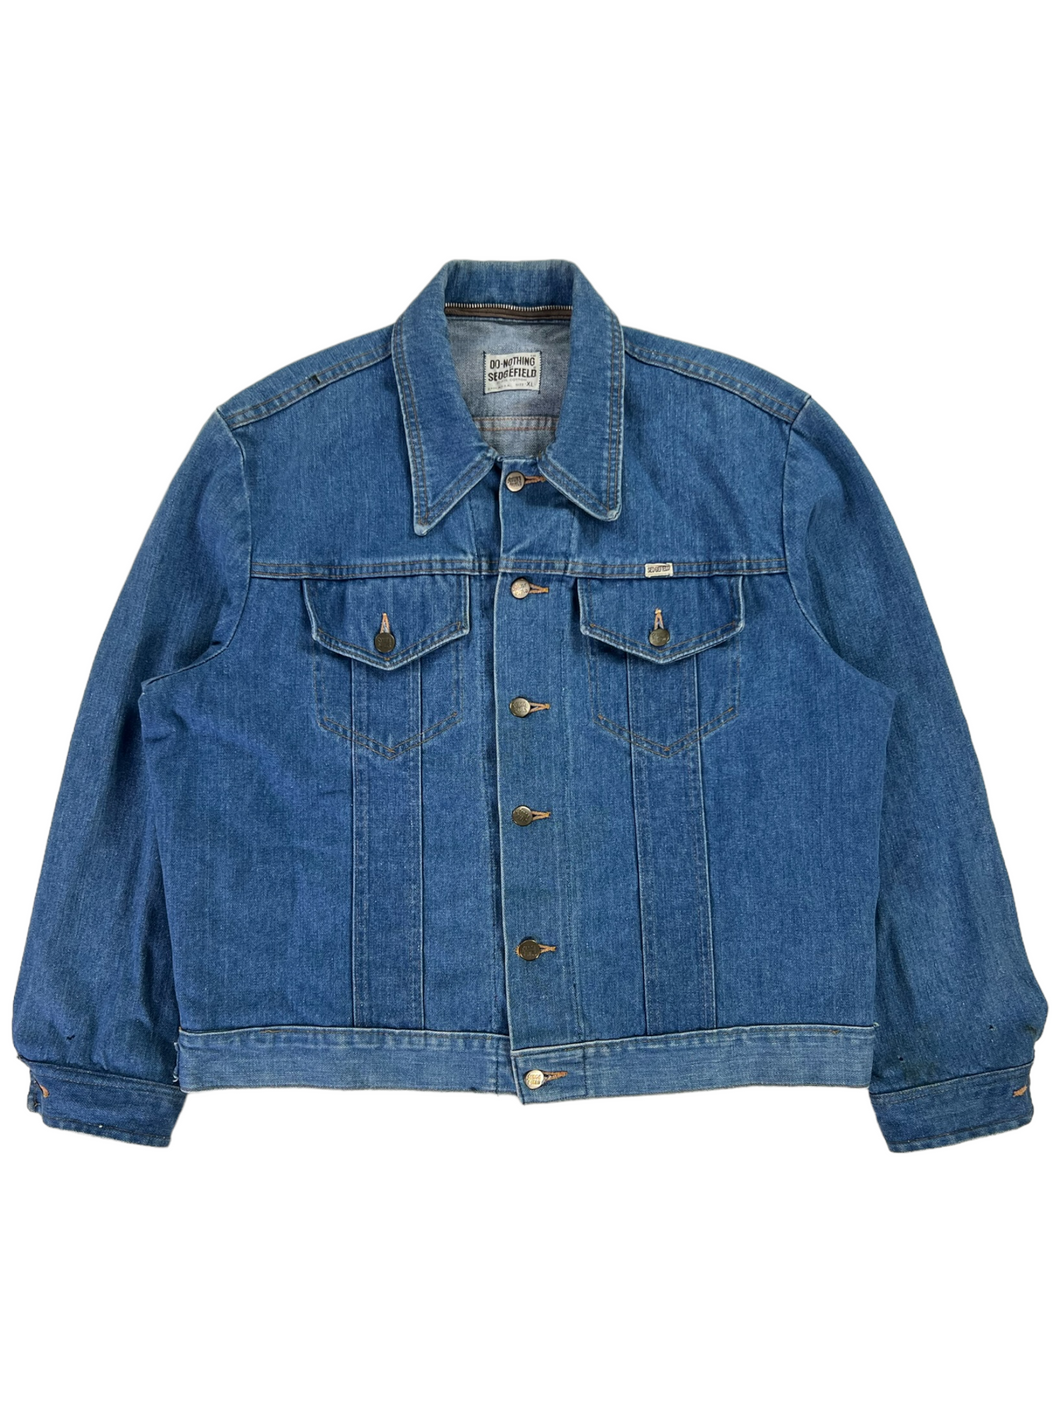 Vintage 80s Do Nothing by Sedgefield denim jean jacket (XL)